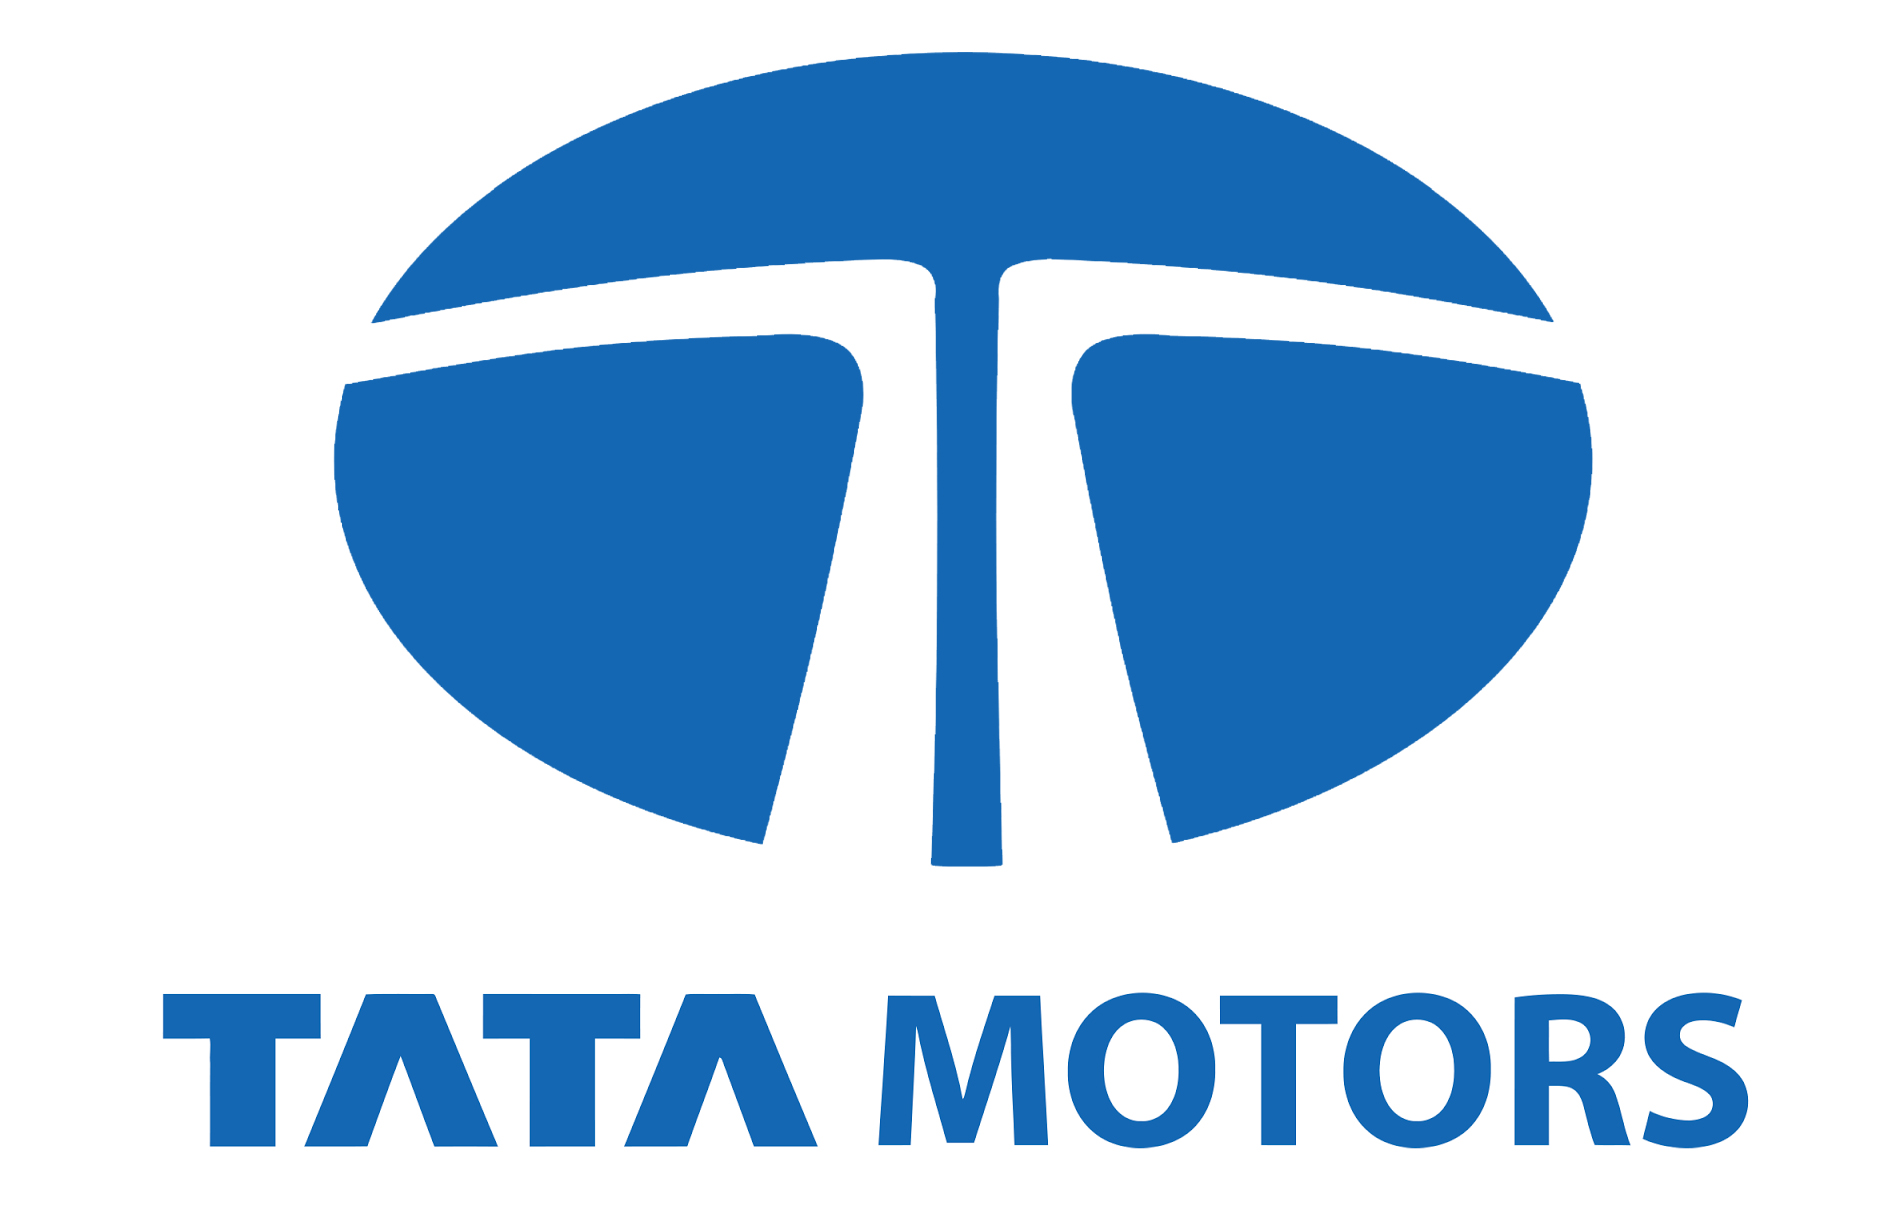 Tata Motors Cars Showroom - Falcon Motors Logo